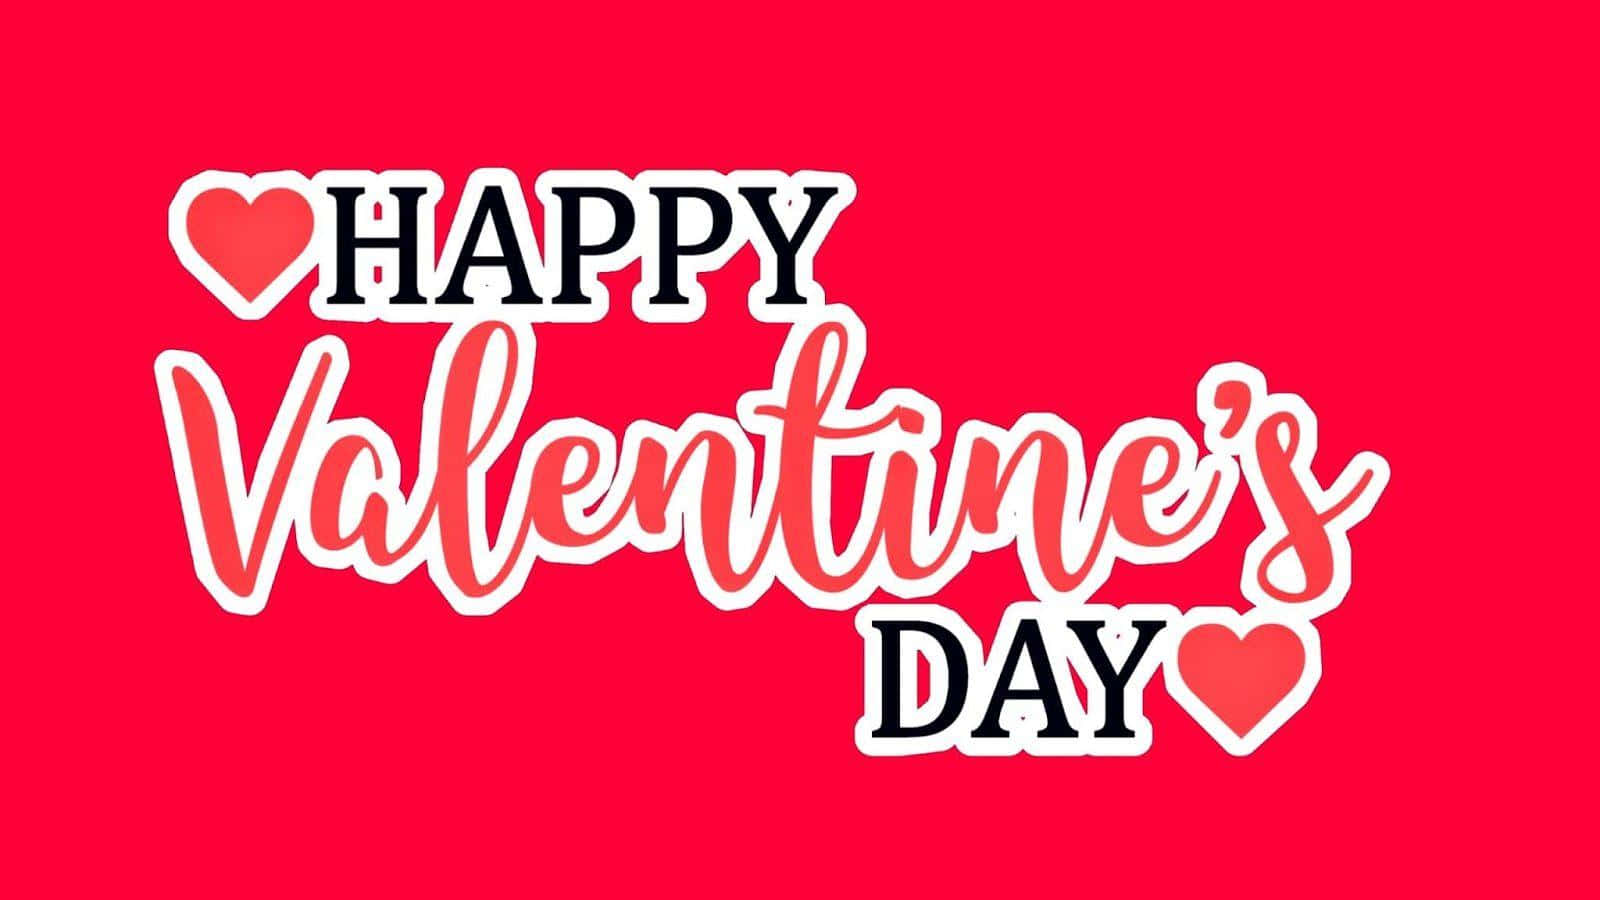 Celebrate love this Valentines